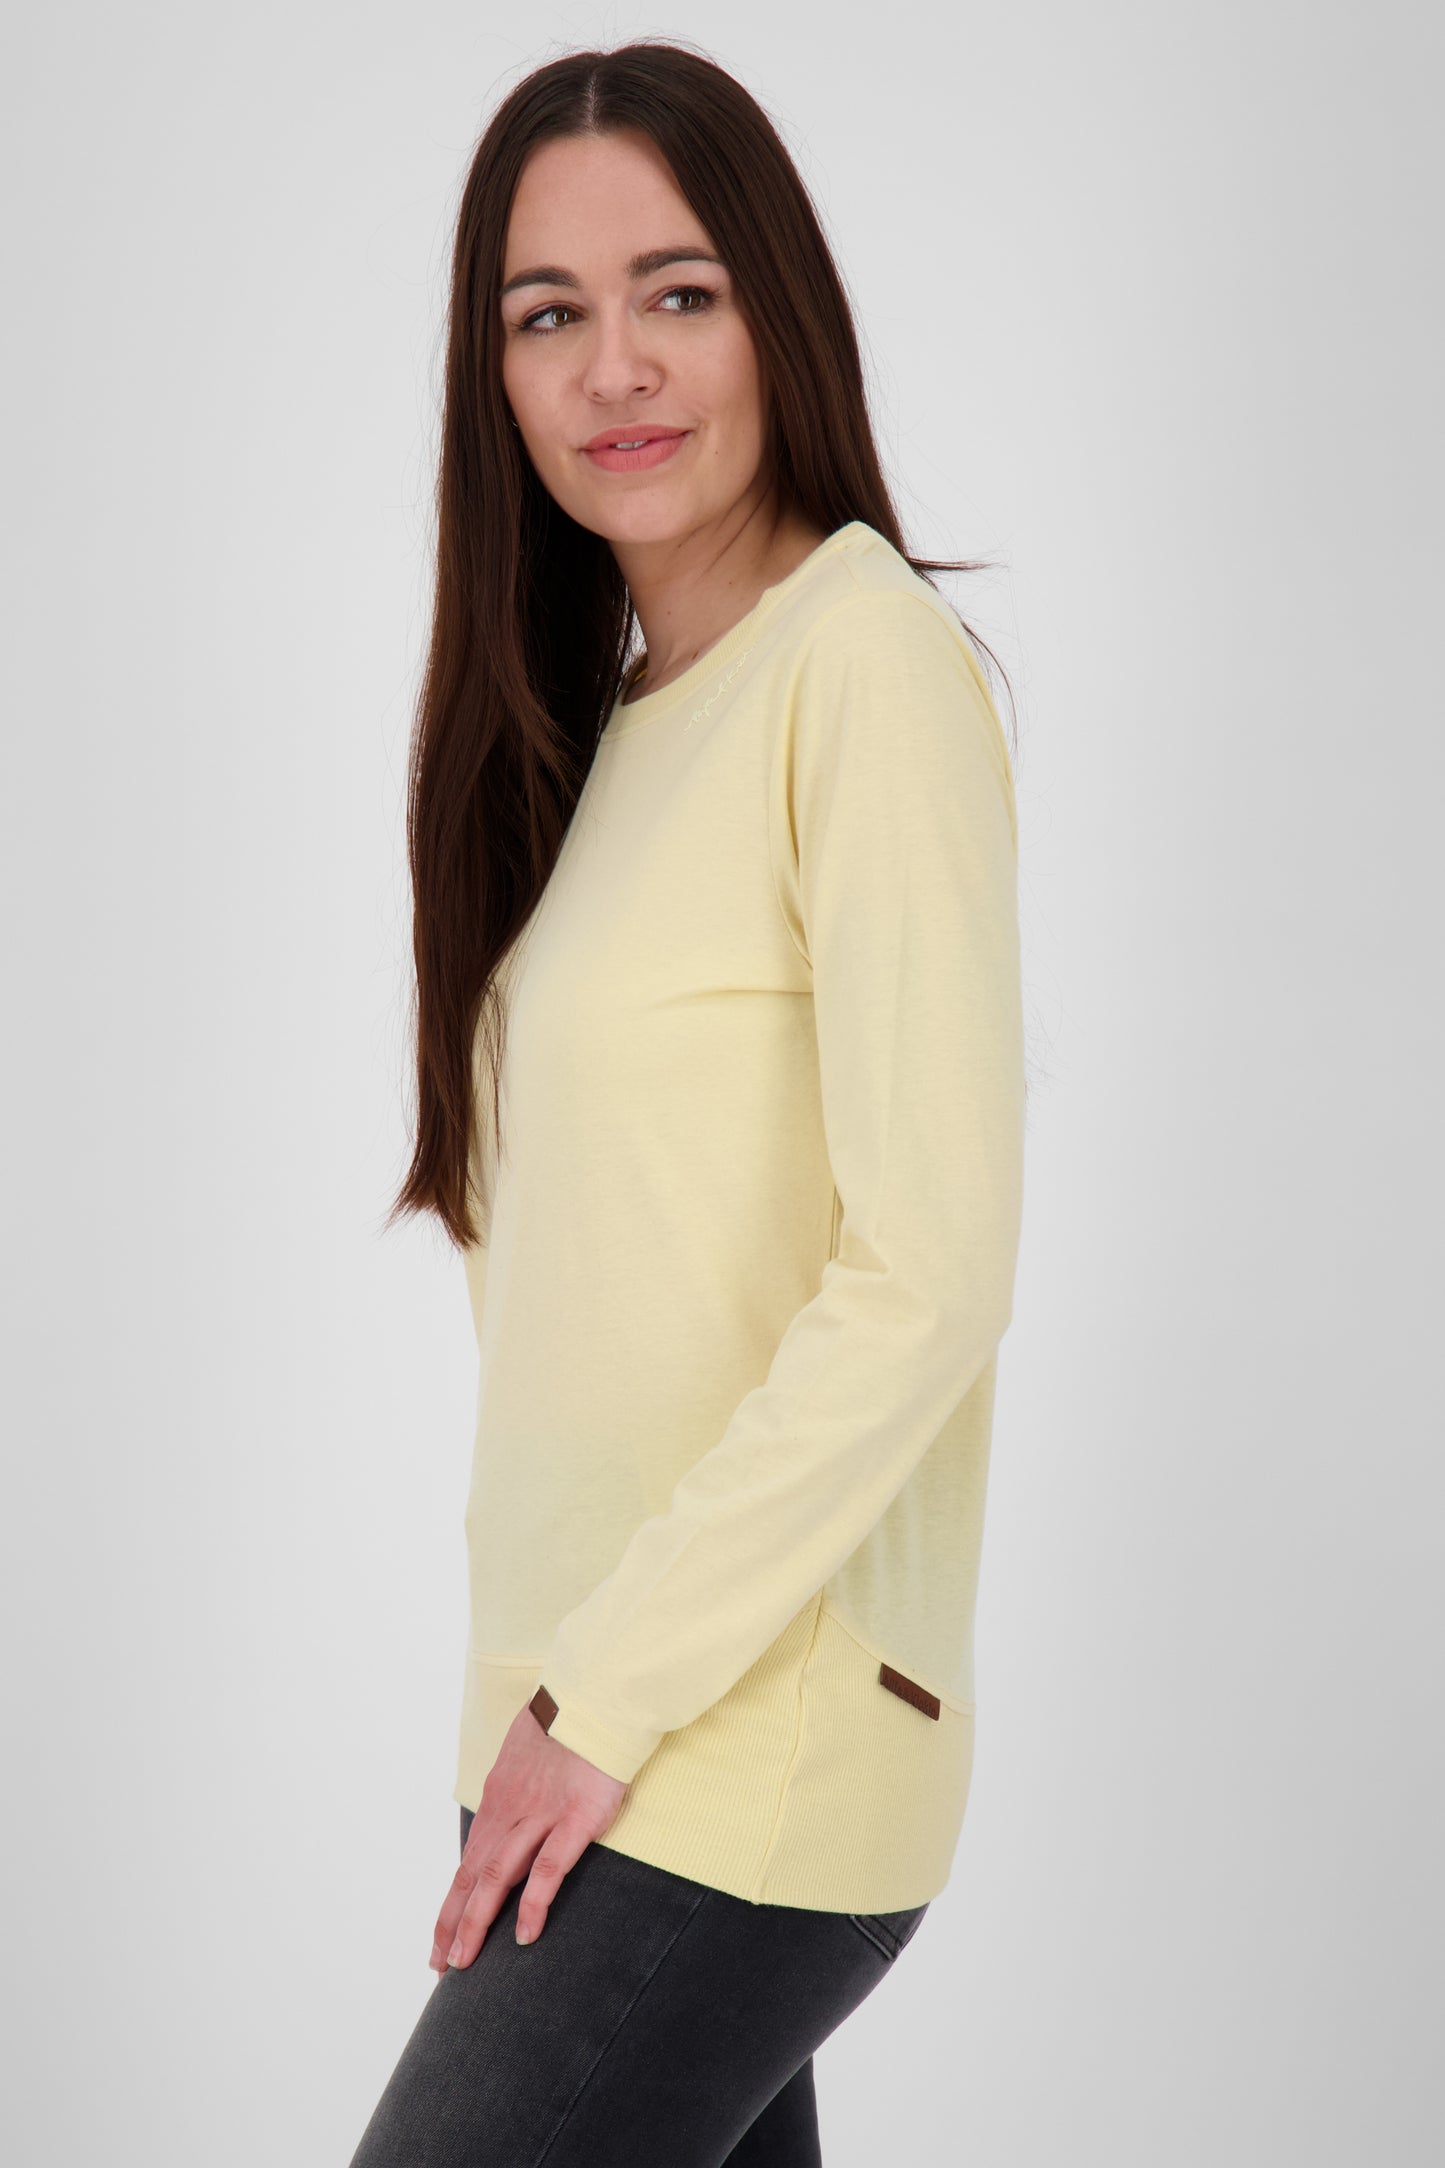 CoralieAK A Damen Langarmshirt in verschiedenen Farben Gelb